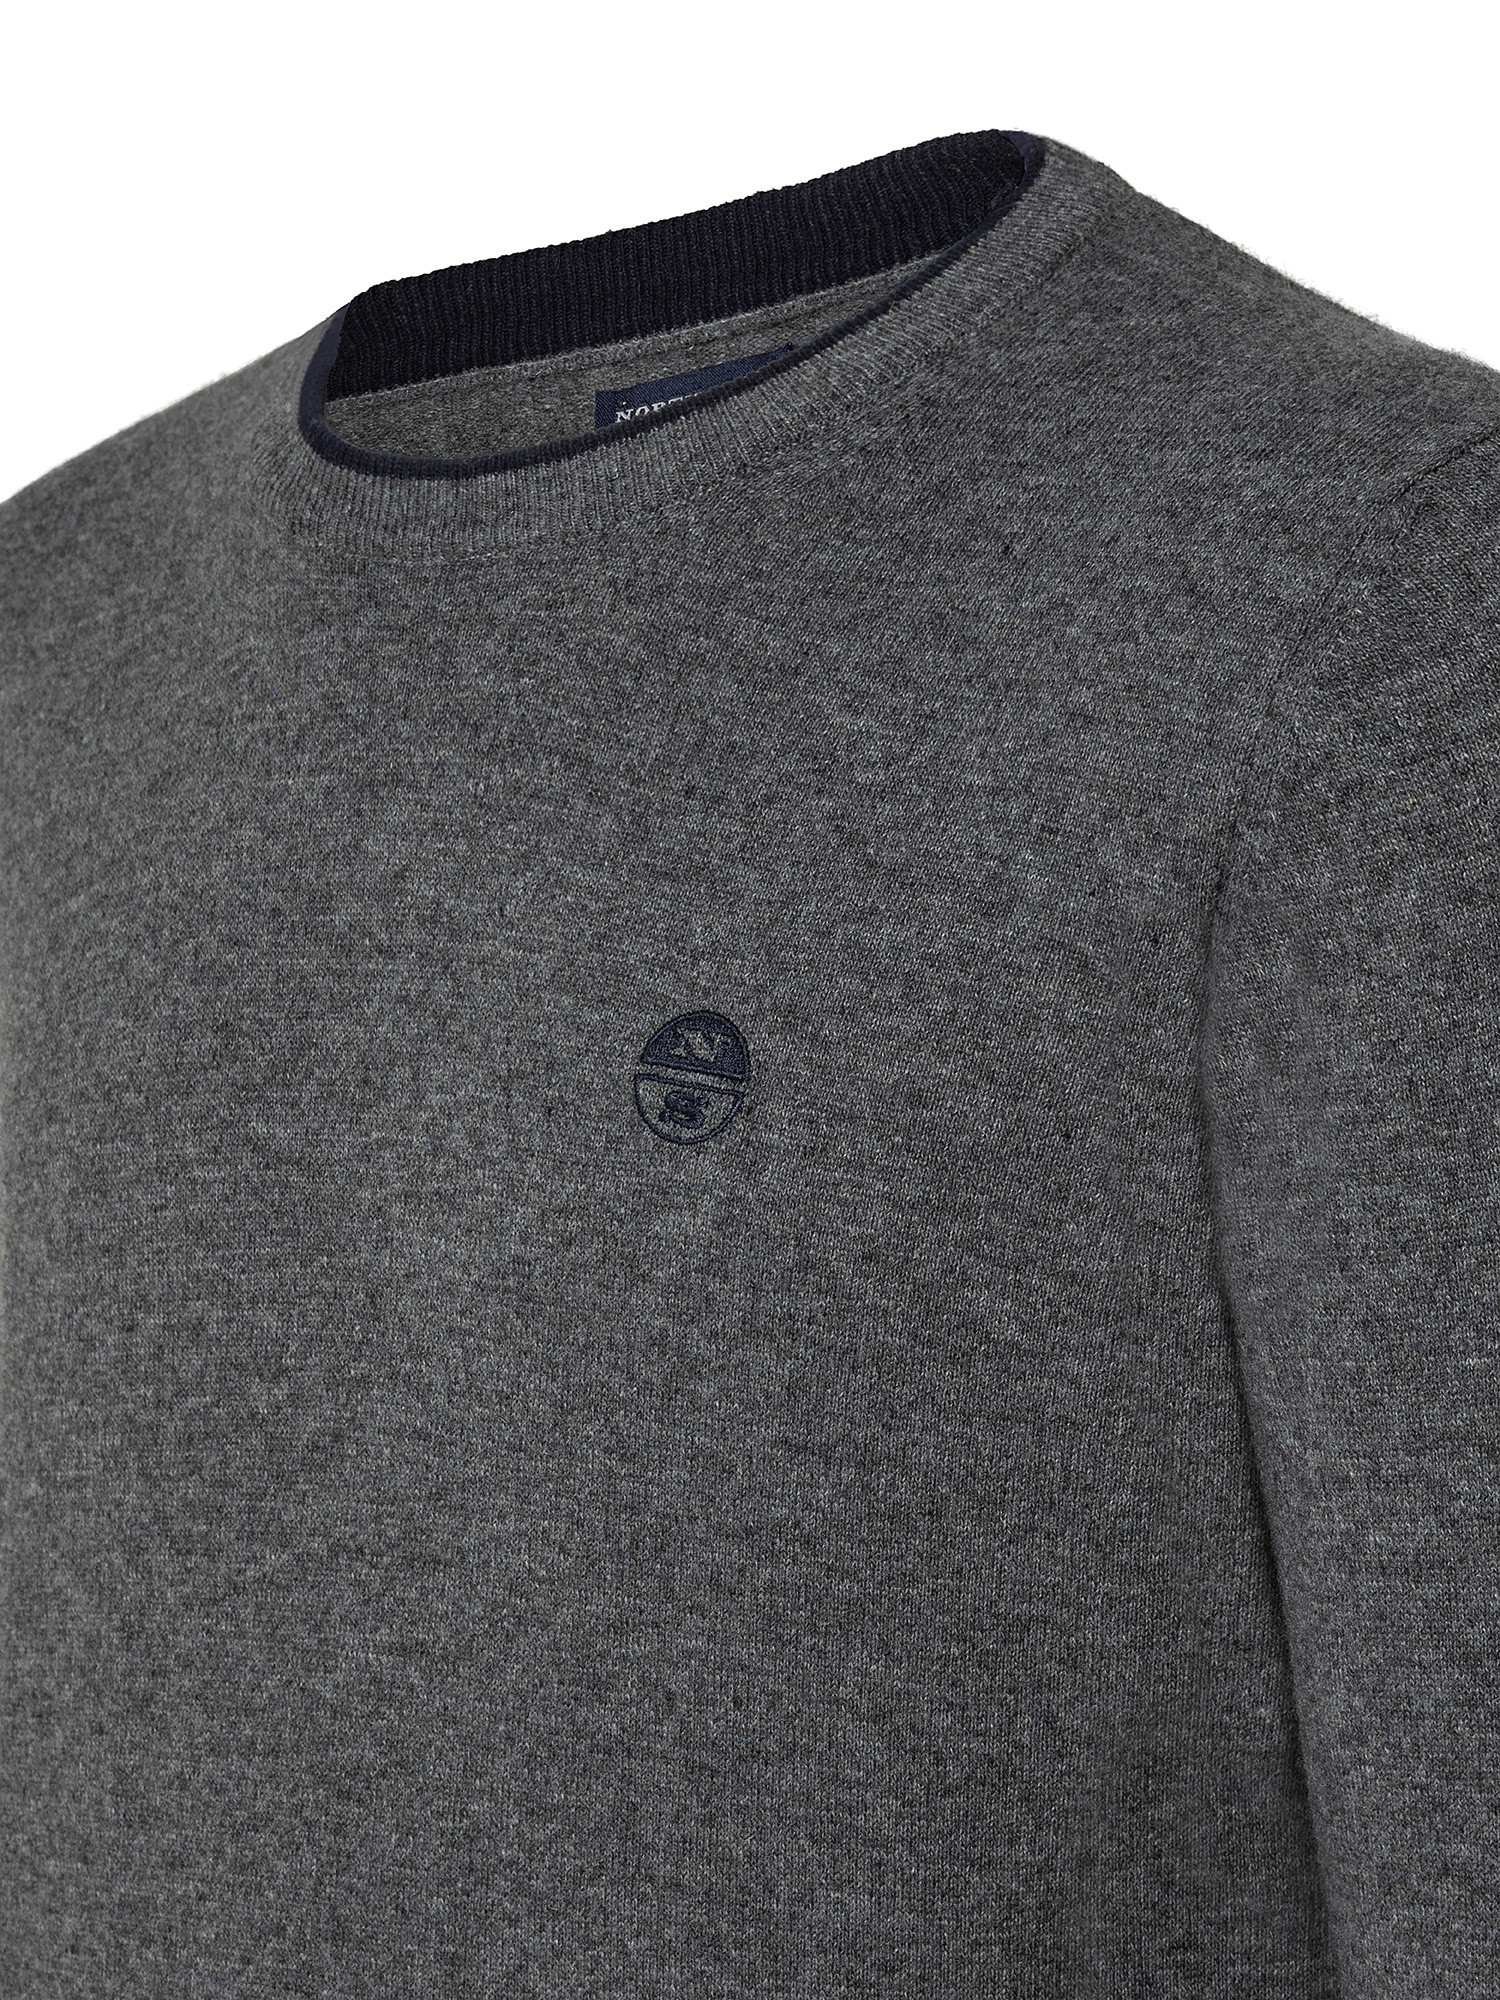 Crewneck sweater, Grey, large image number 2